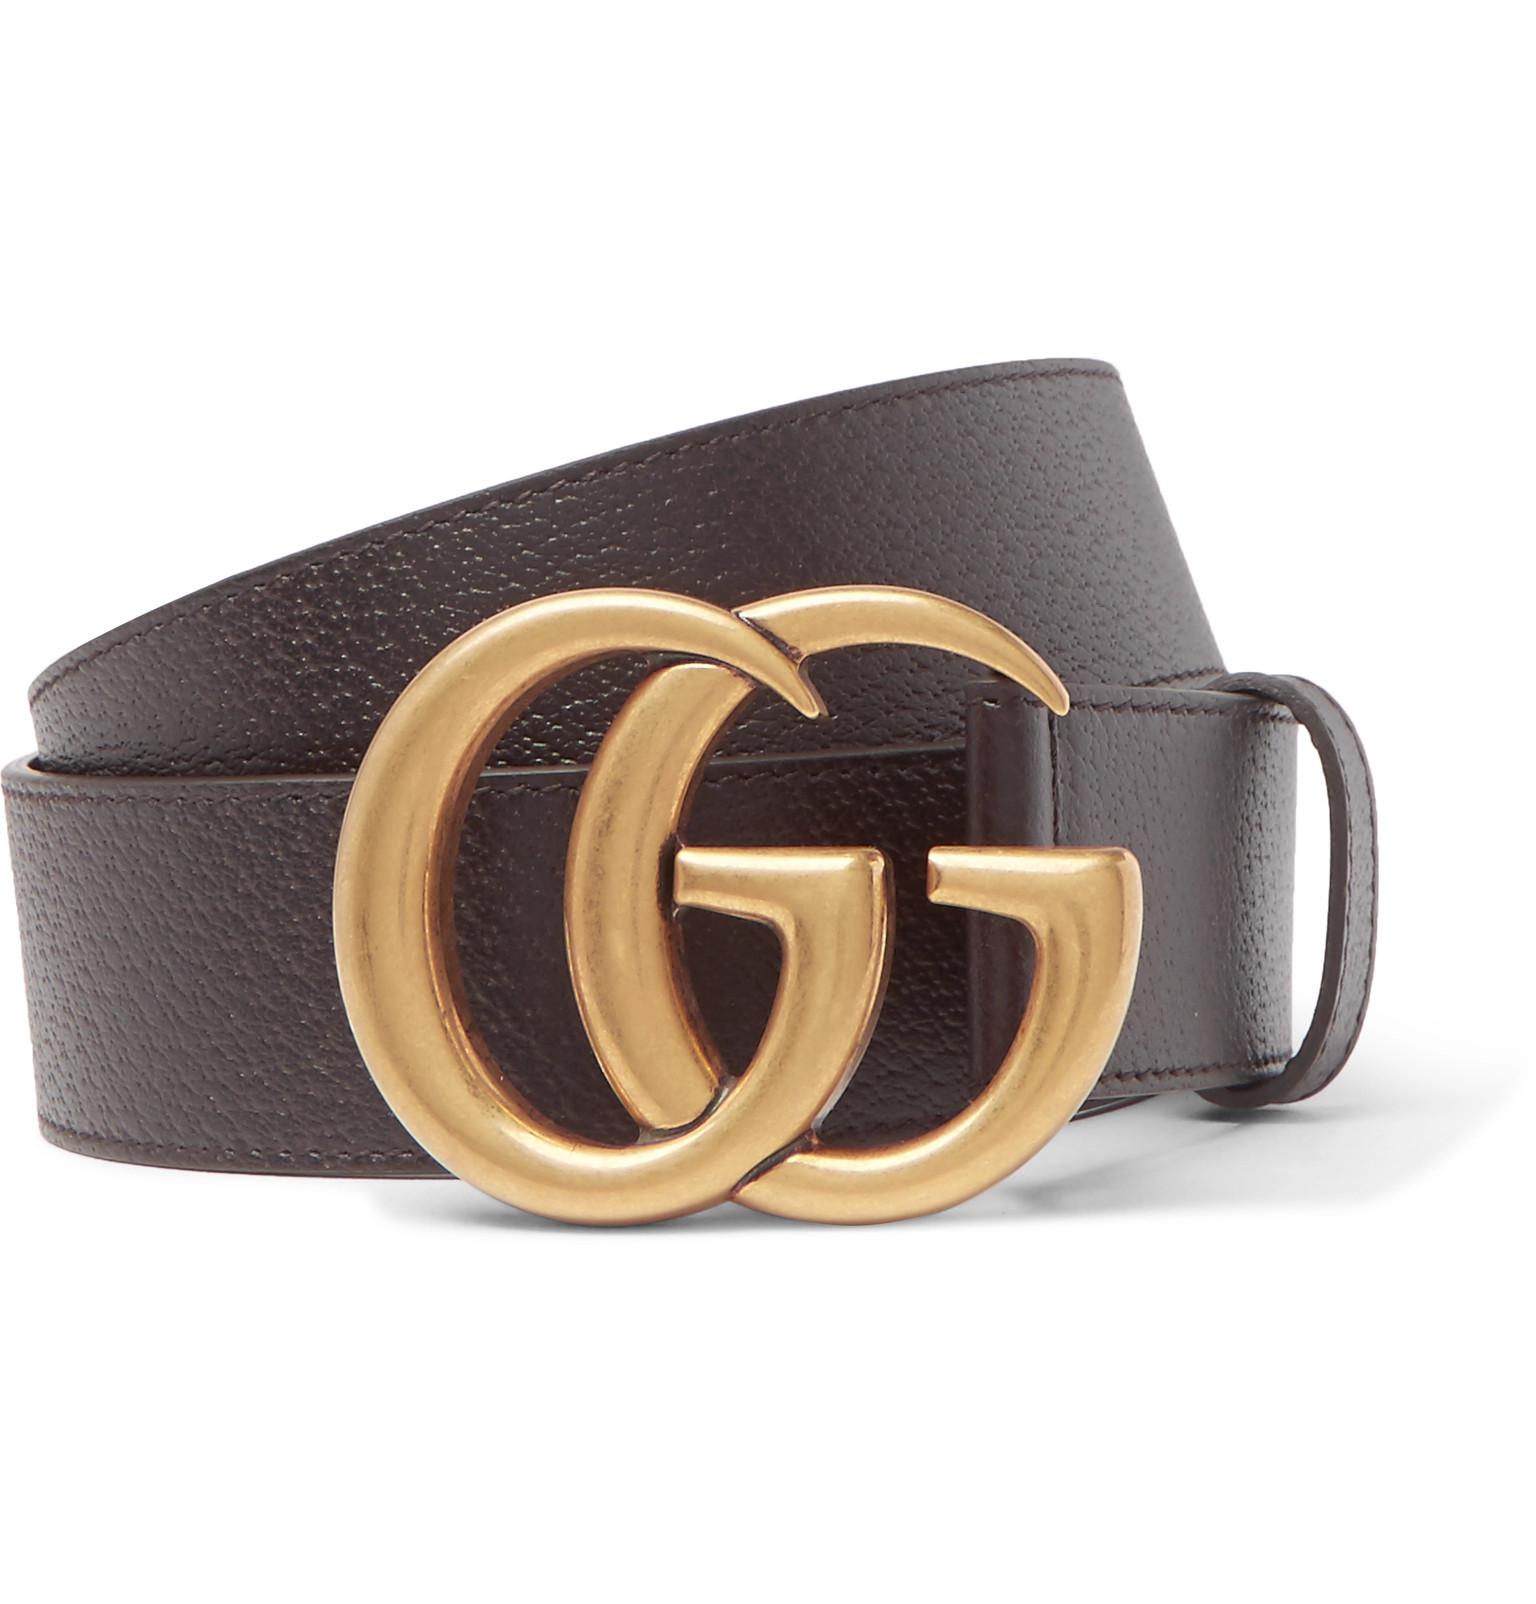 Lyst - Gucci - 4cm Brown Full-grain Leather Belt - Dark Brown in Brown